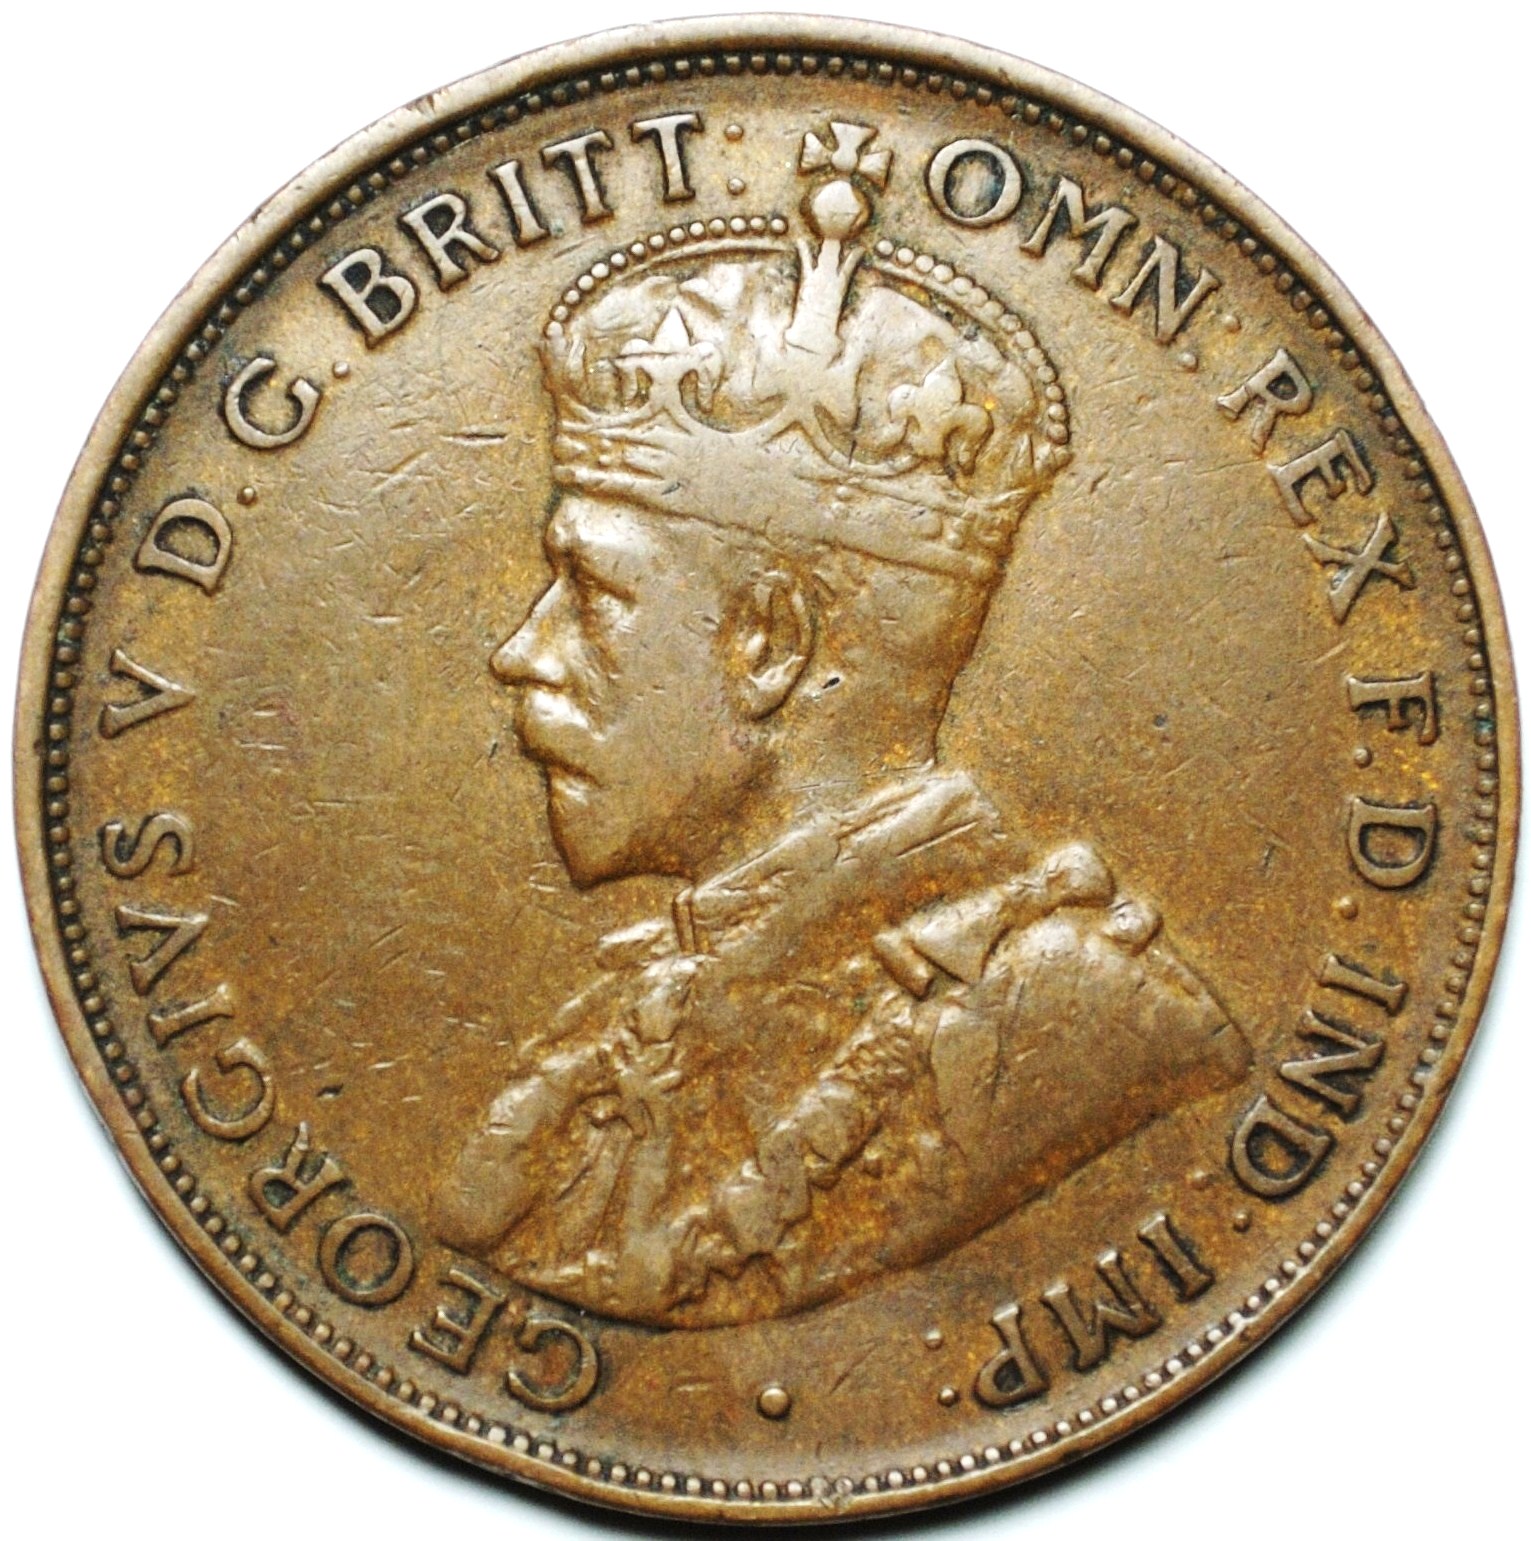 1921 Australian penny, London obverse variety, obverse